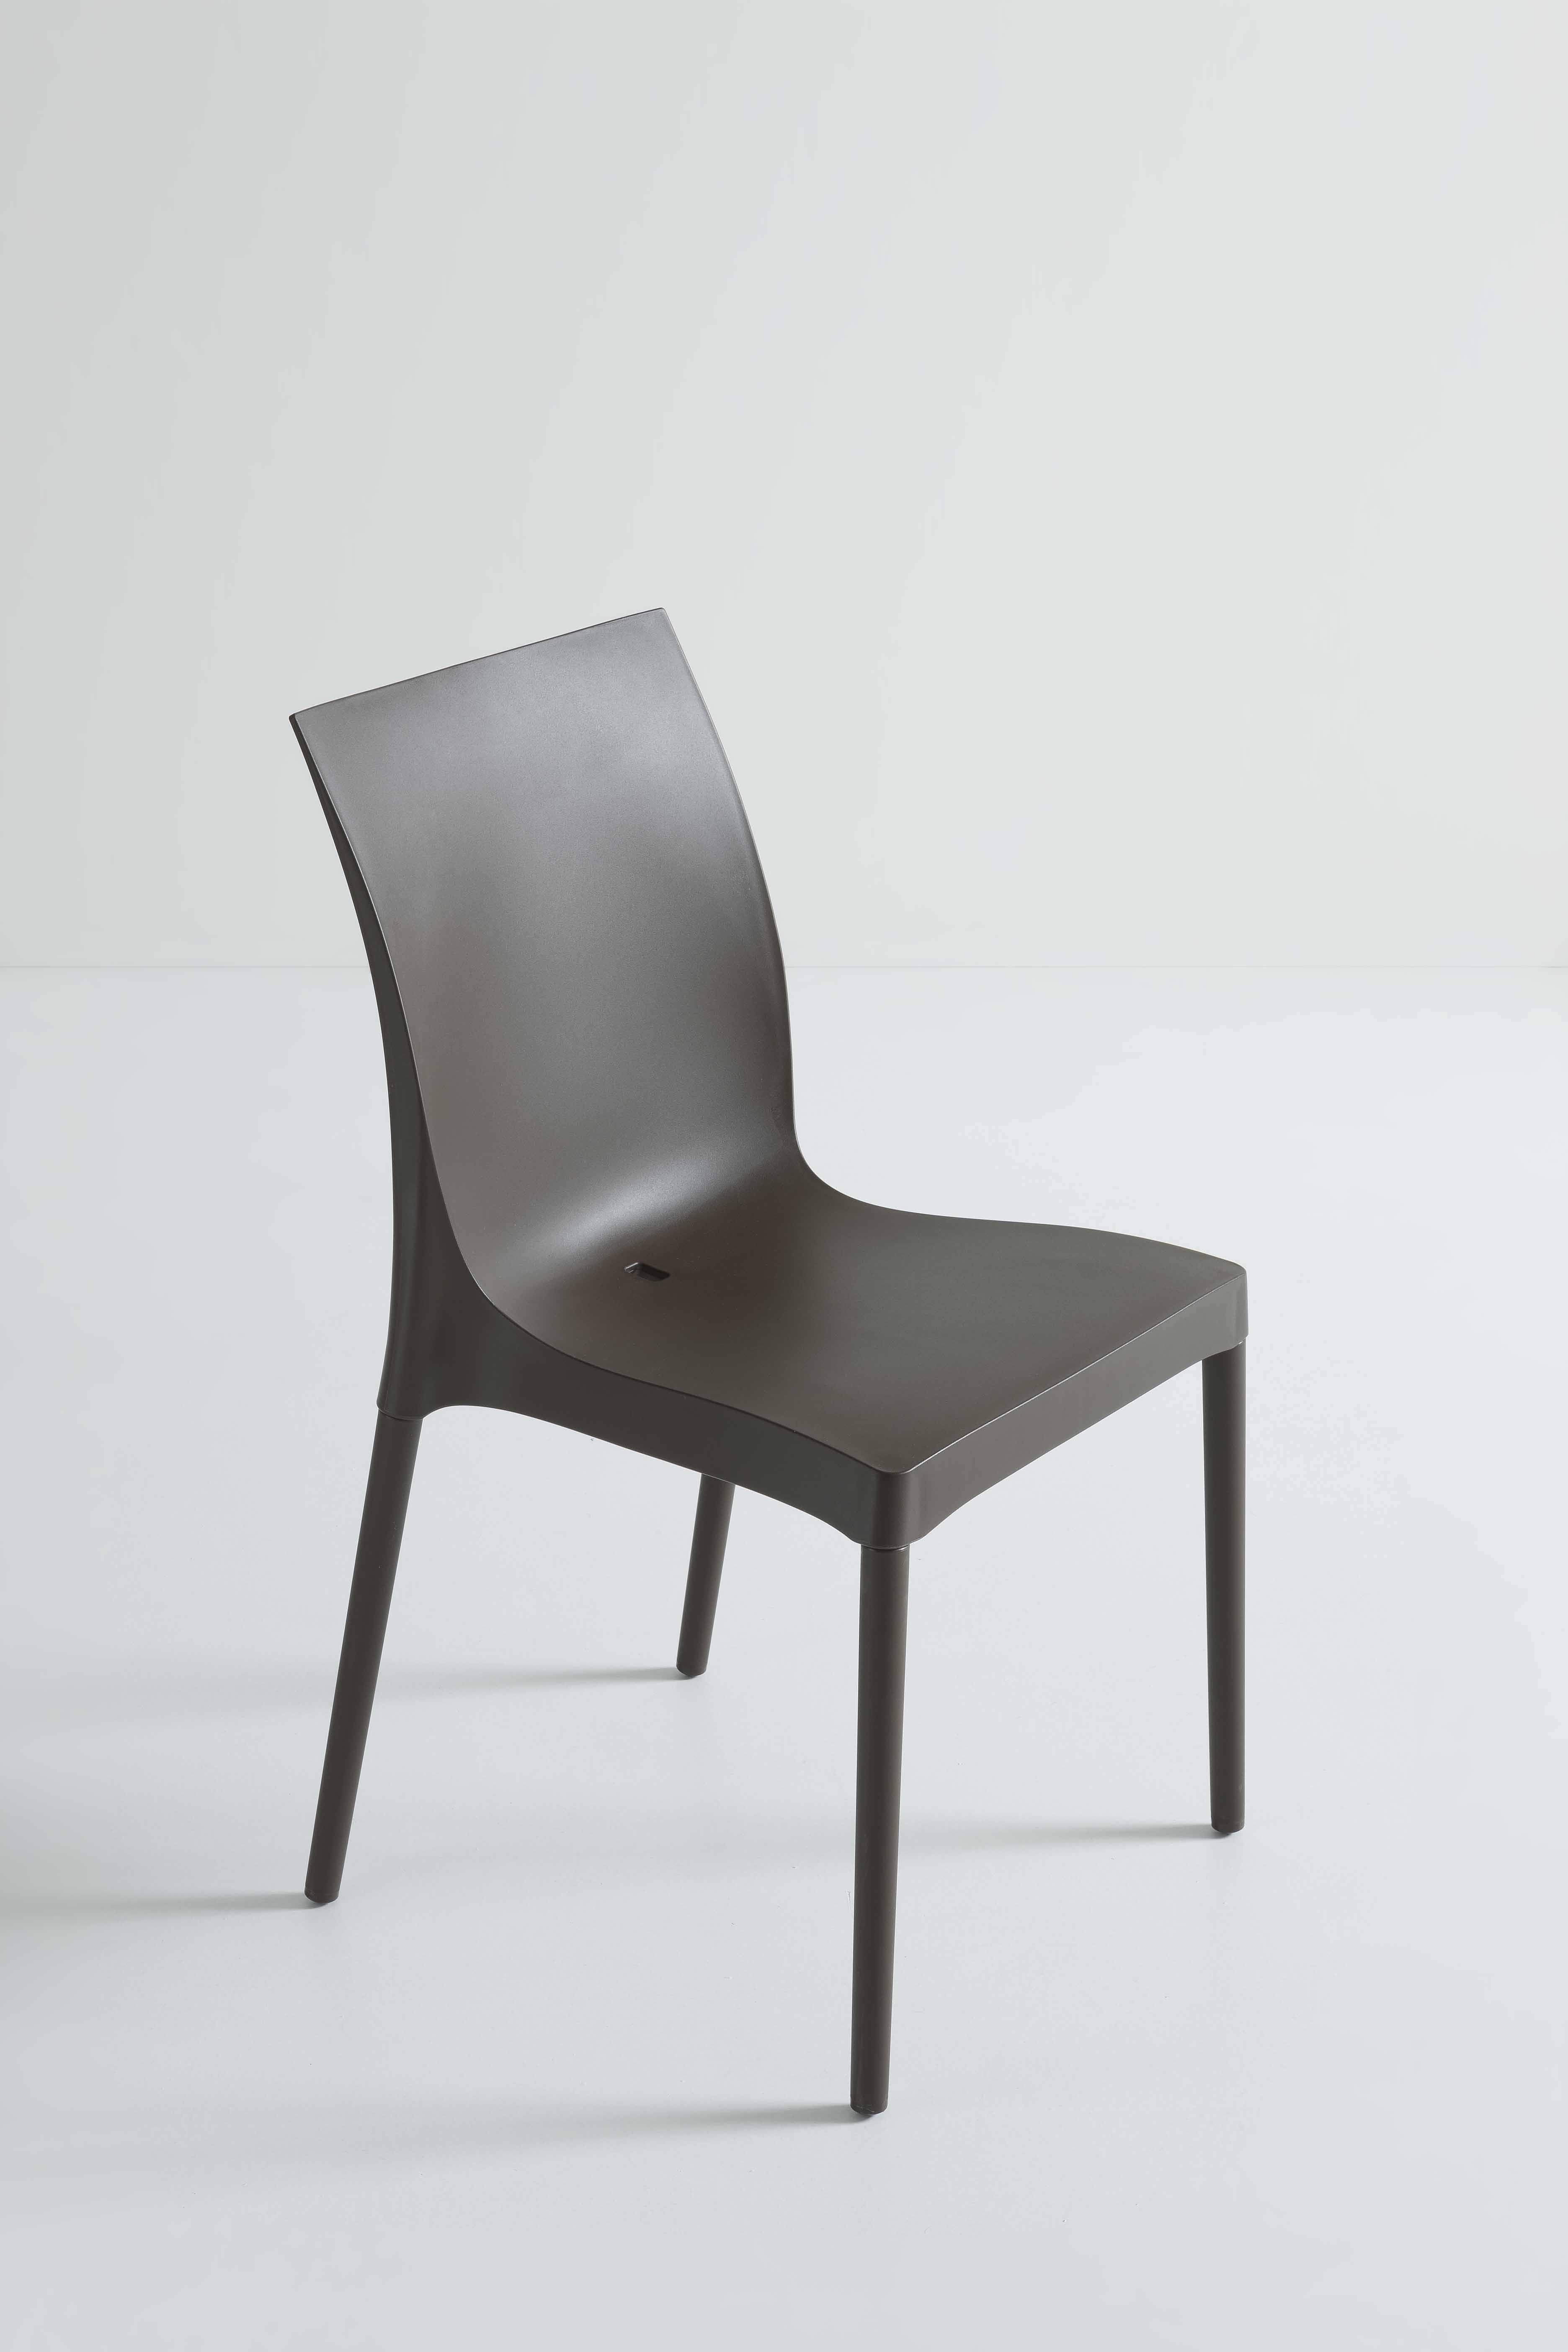 Gaber Iris Gartenstuhl - stapelbar - Metall mit Kunststoff Sitzschale